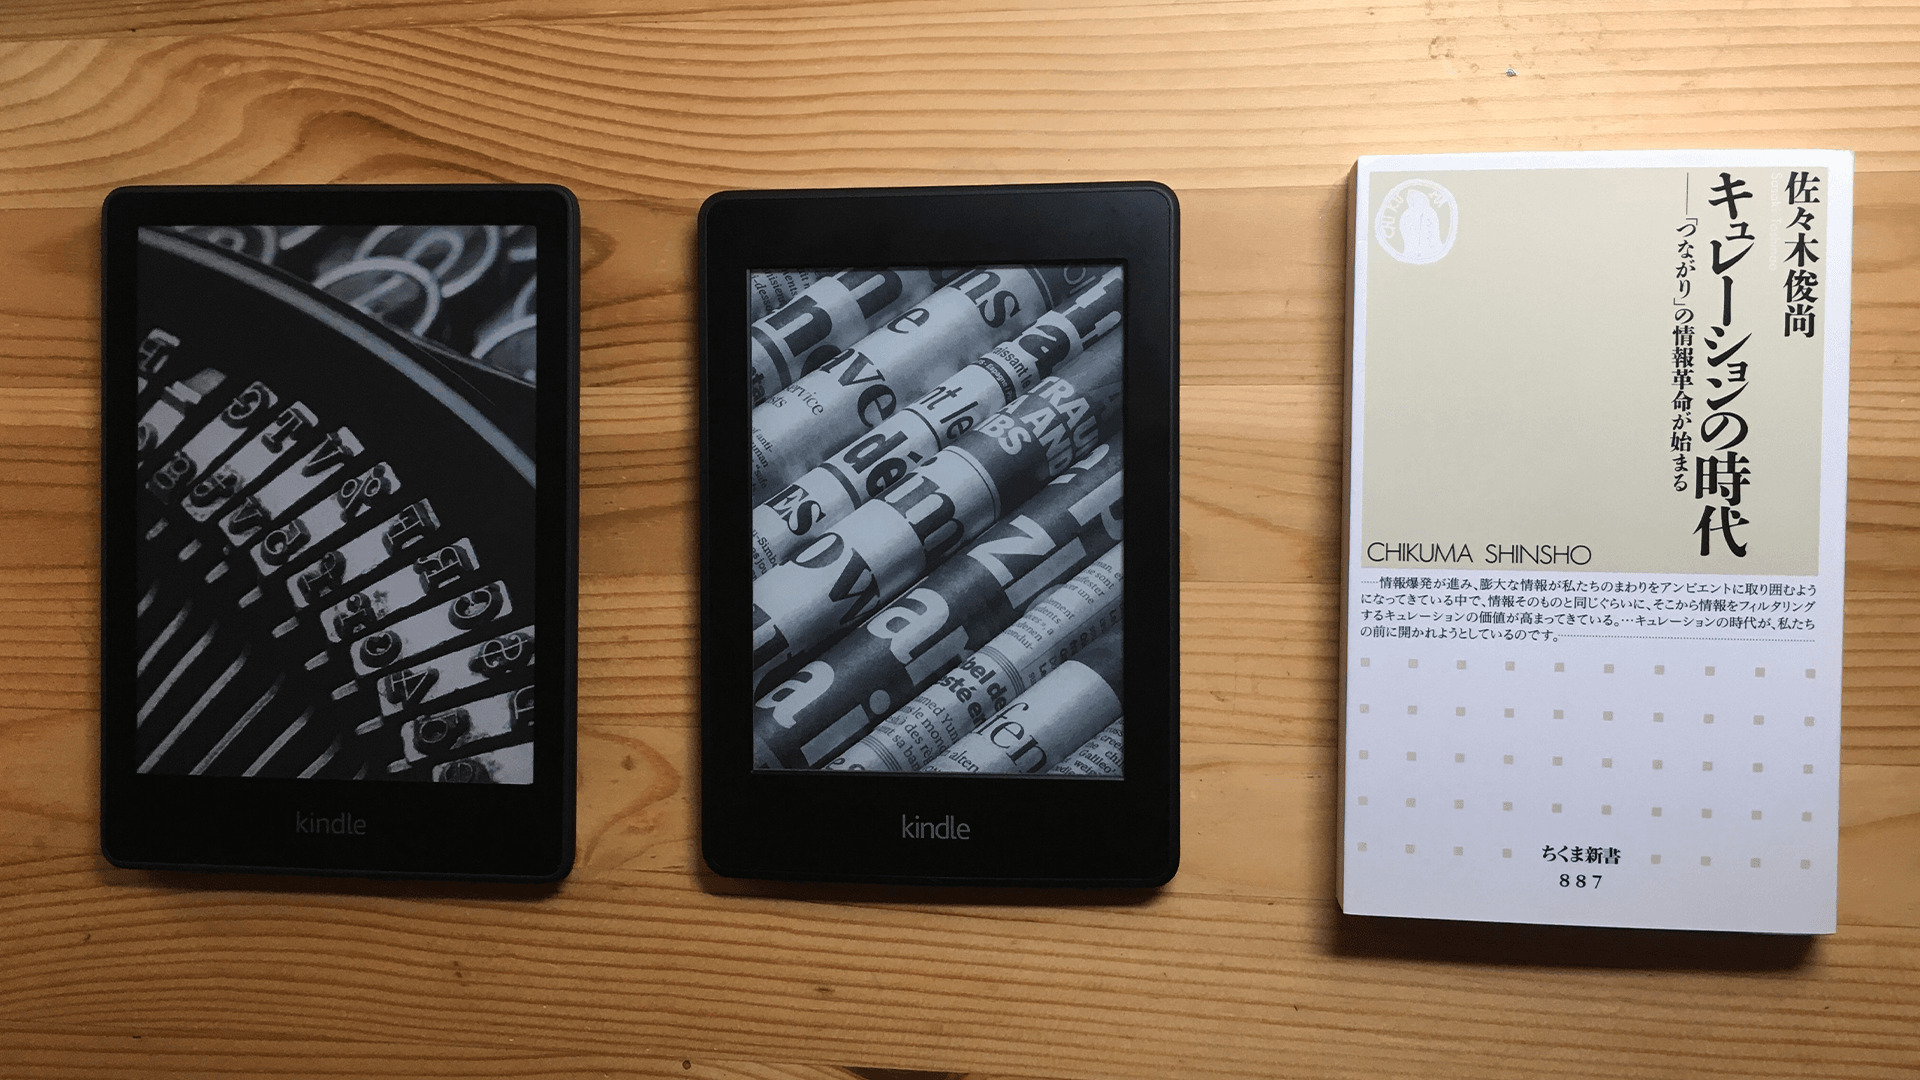 Kindle電子書籍リーダー: デジタル本とクリエーターの収入アップとの読書の特別な関係